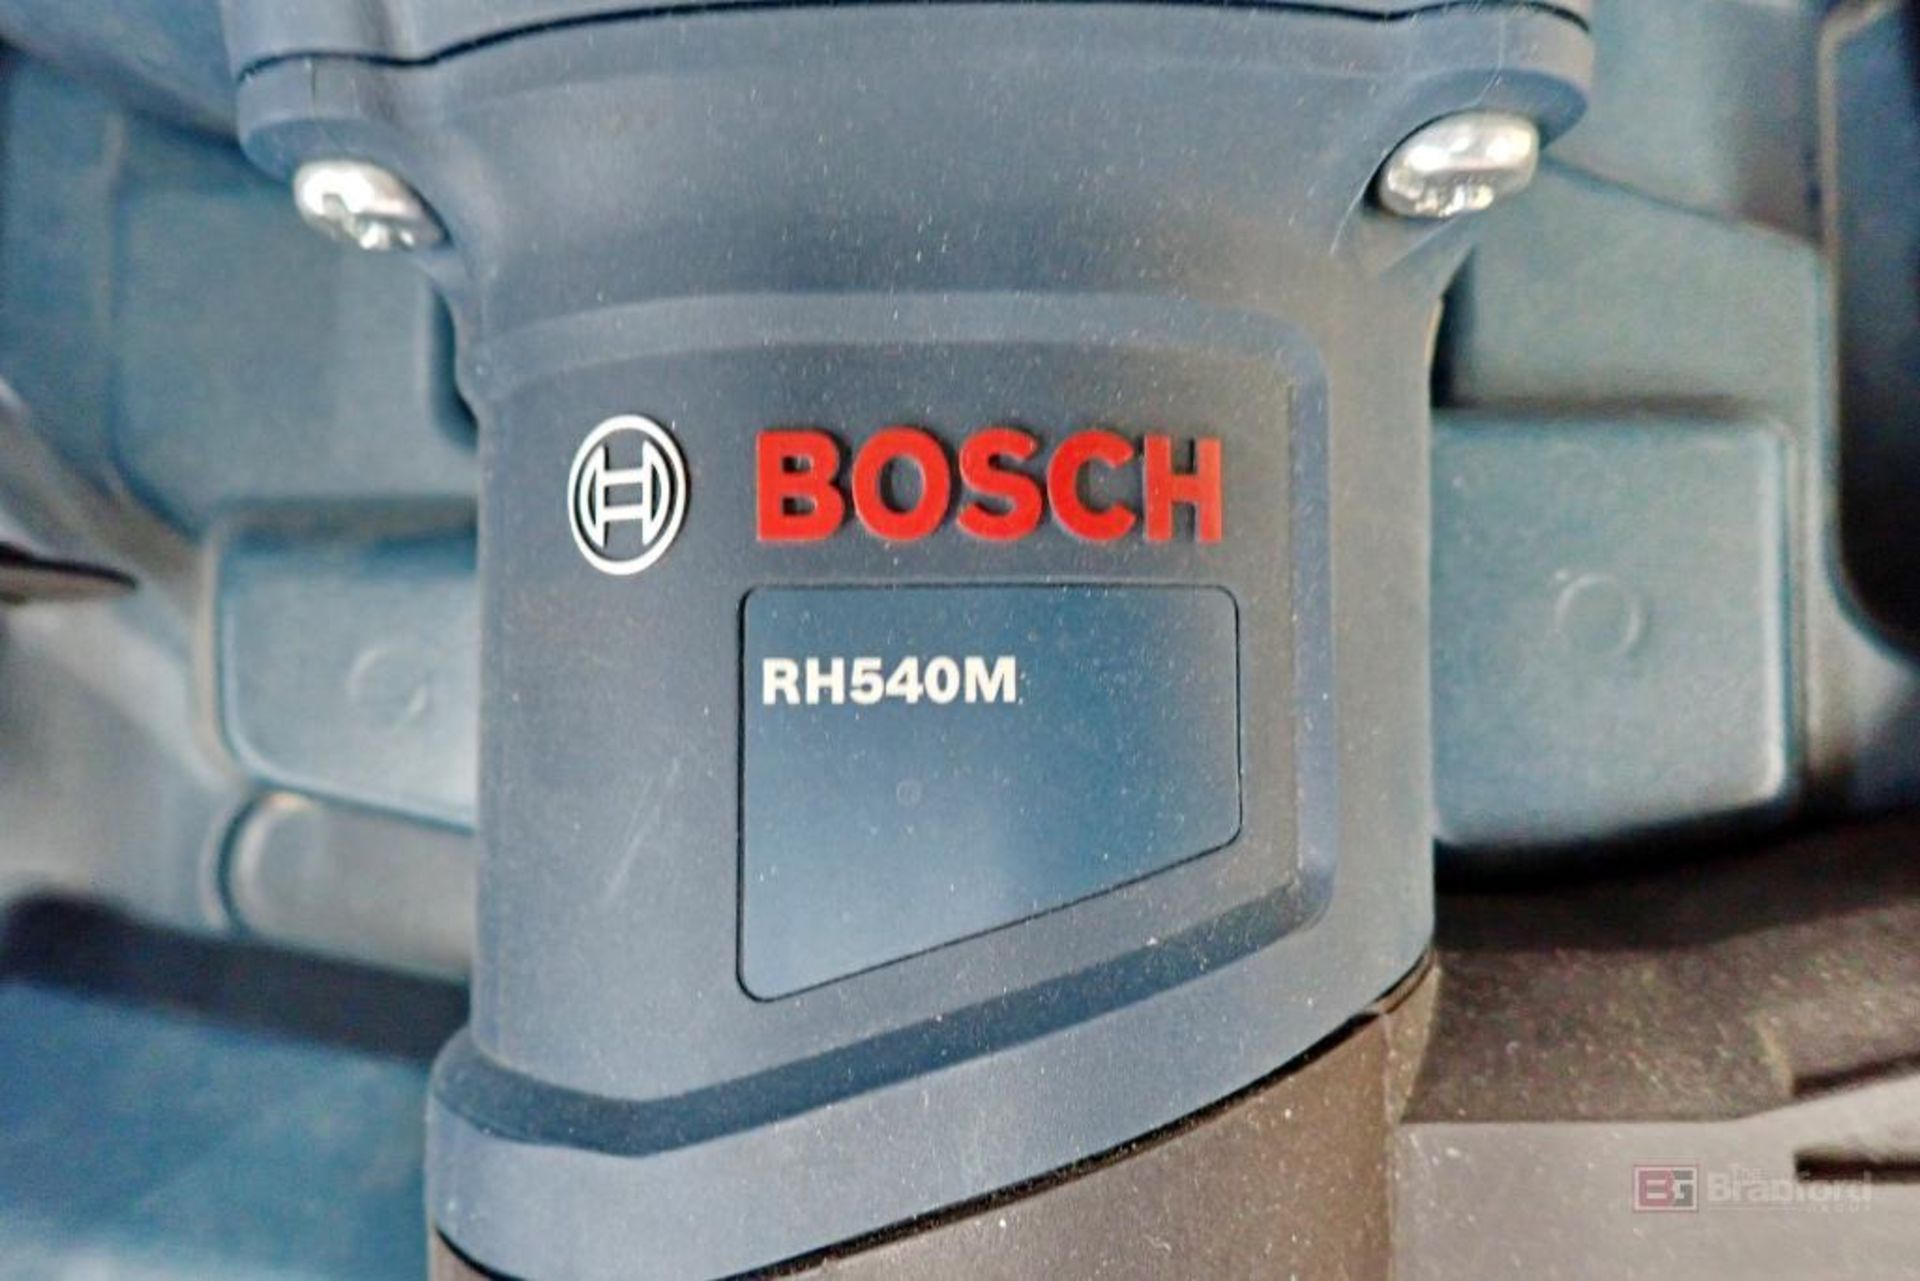 Bosch RH540M-RT BoschHammer Rotary Hammer - Image 4 of 6